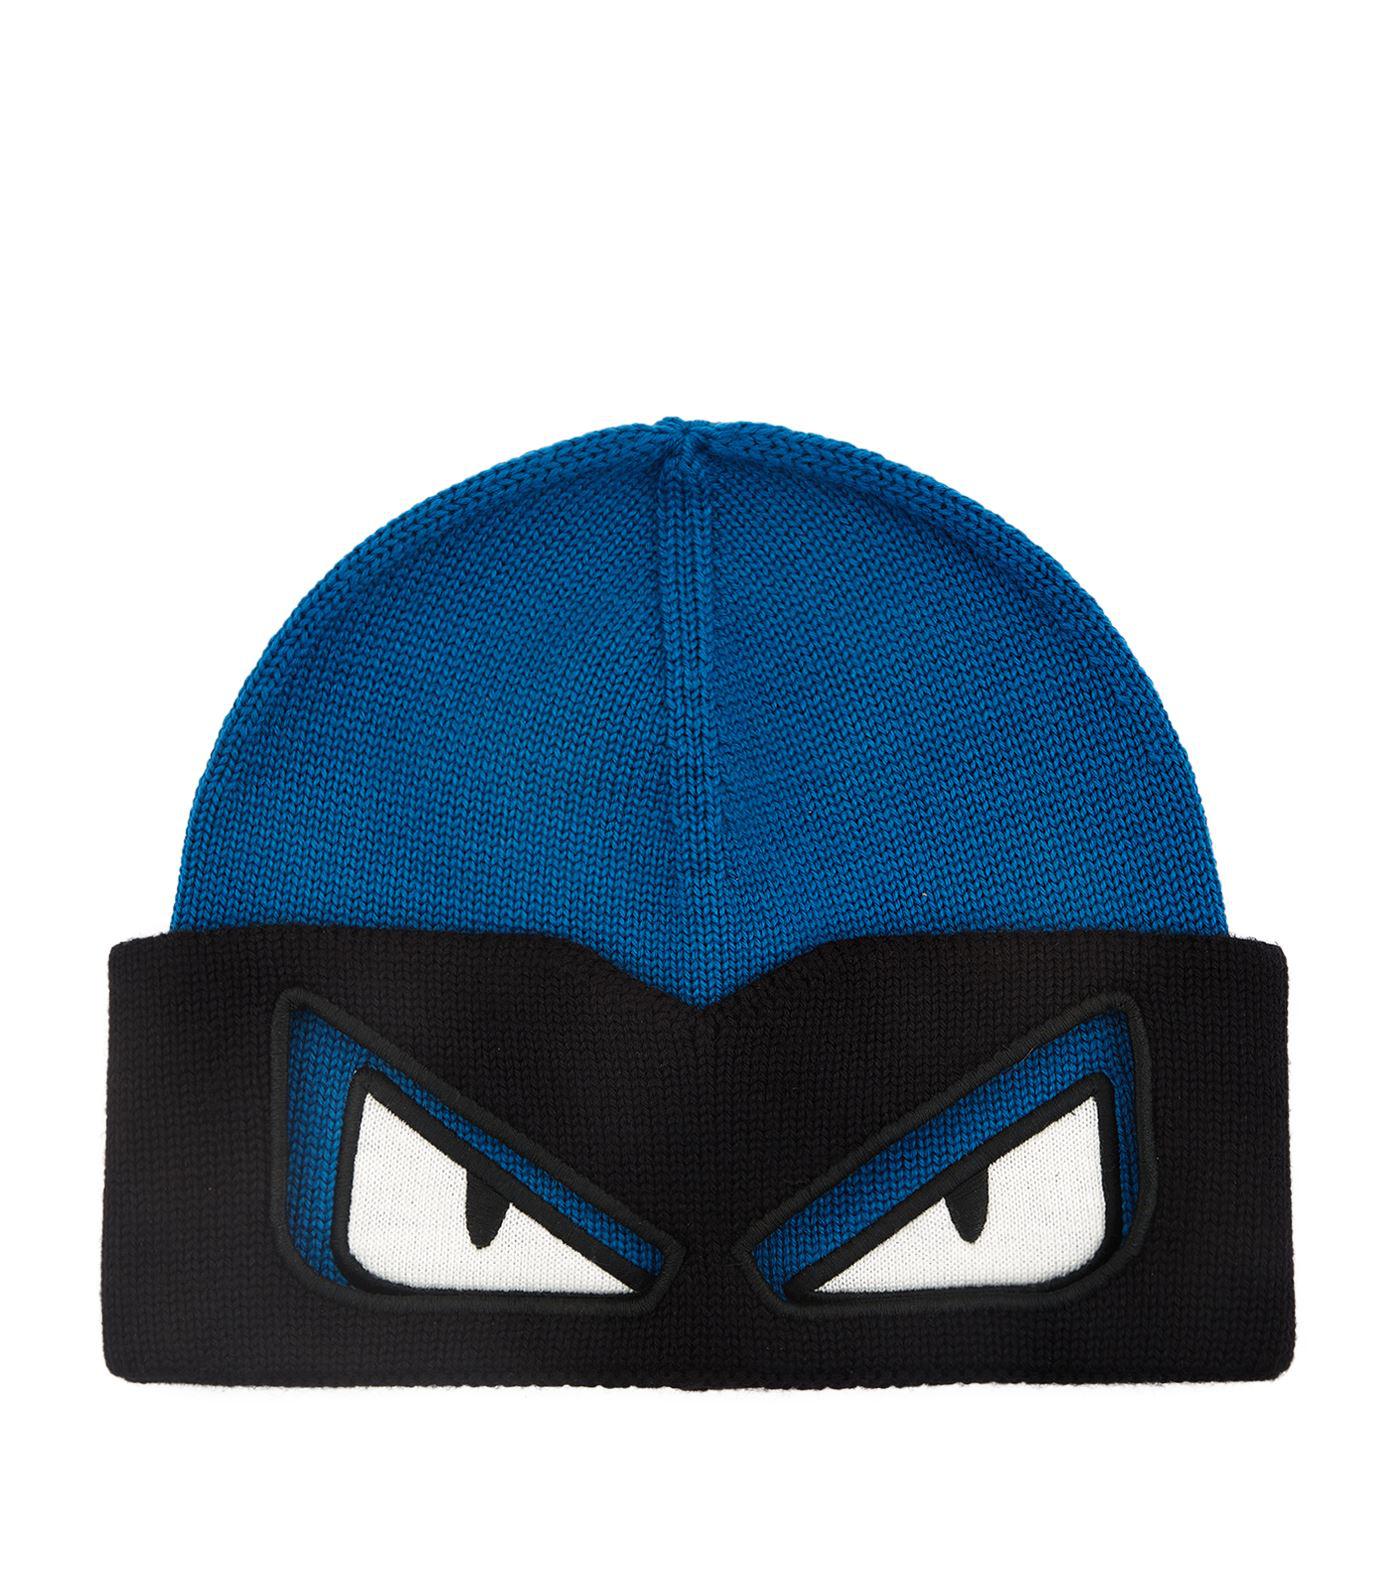 Lyst - Fendi Ninja Eyes Beanie Hat in Blue for Men